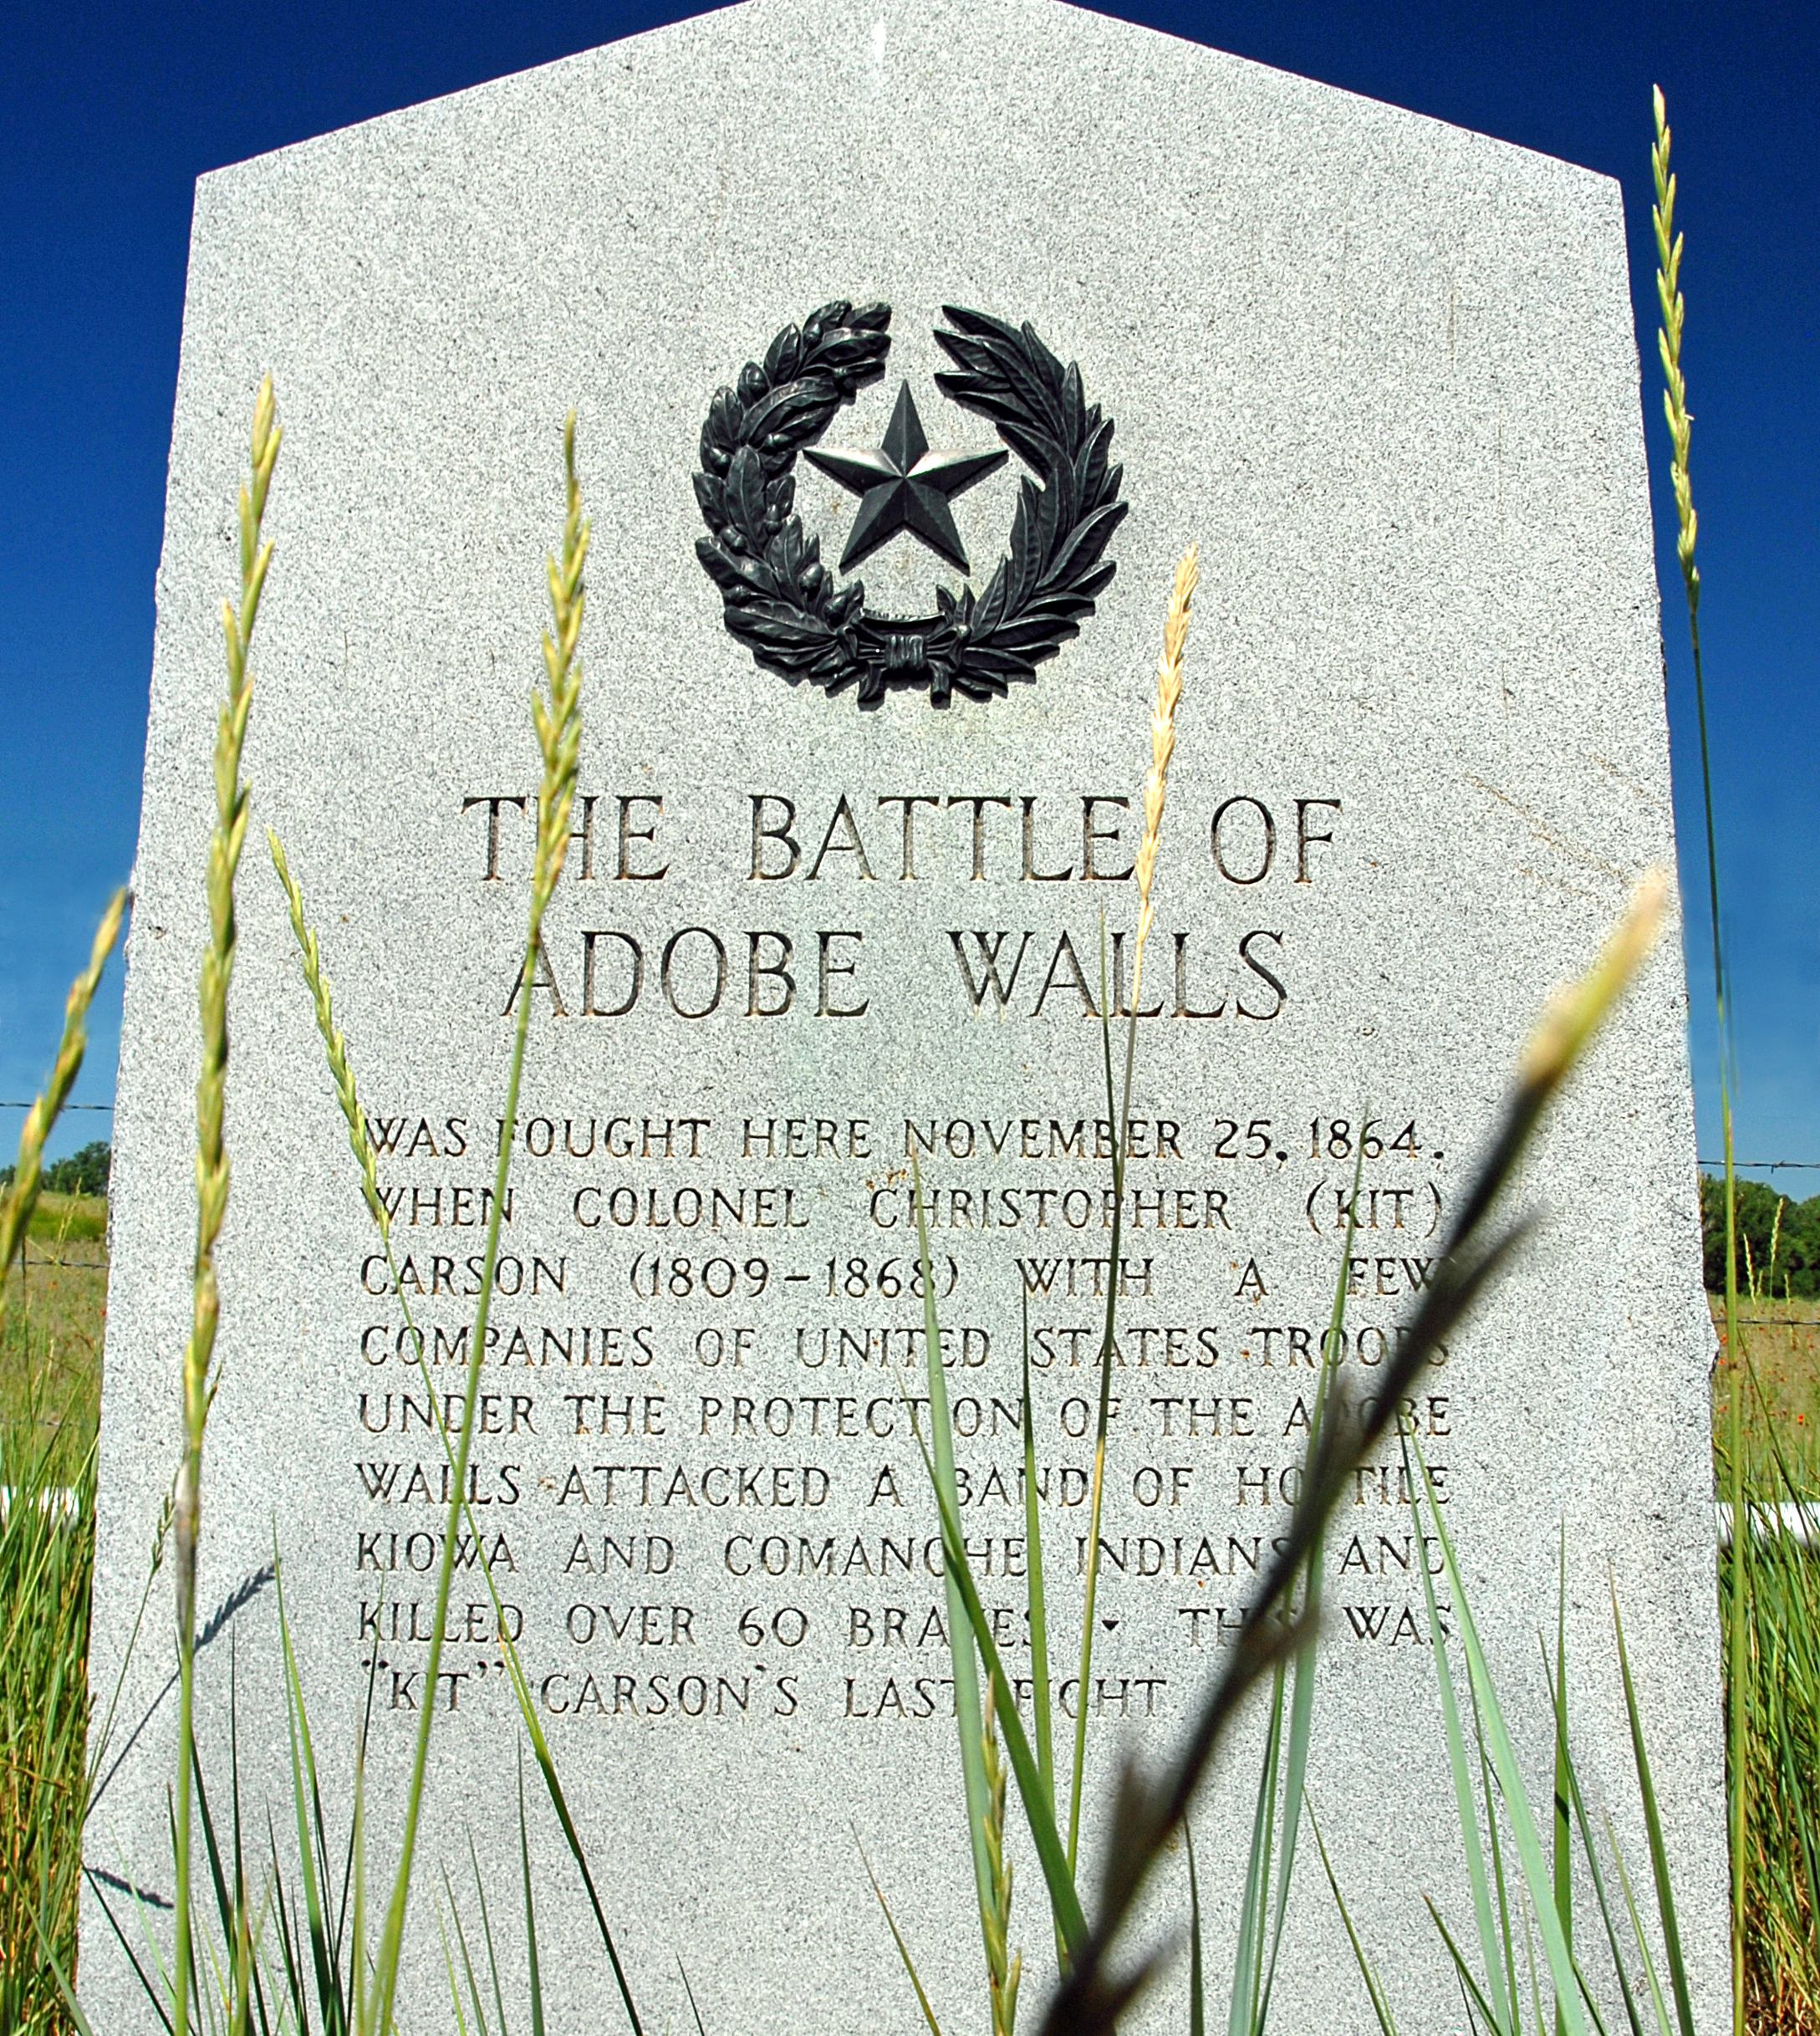 Adobe walls monument